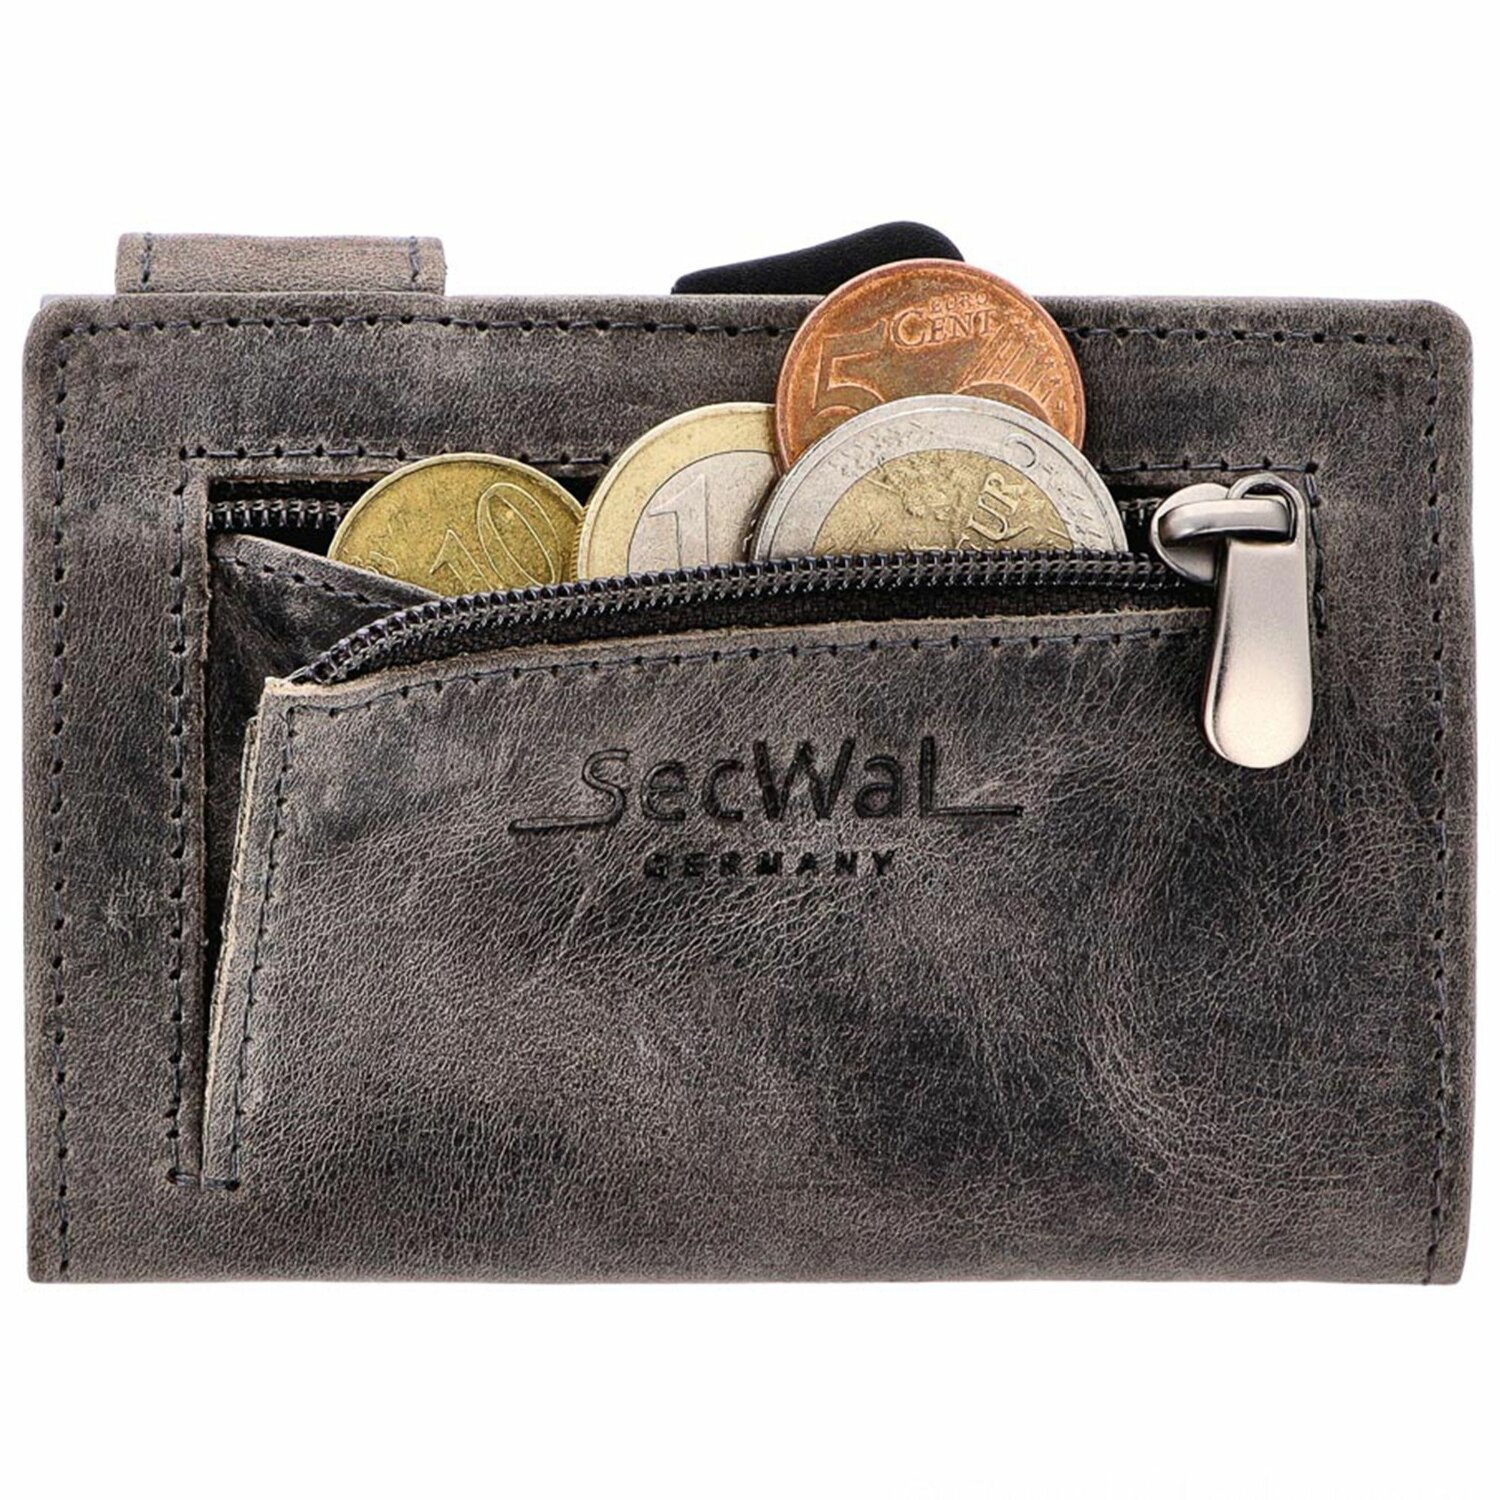 SecWal SecWal 2 Porte-Cartes de crédit Portemonnaie RFID Cuir 9 cm 